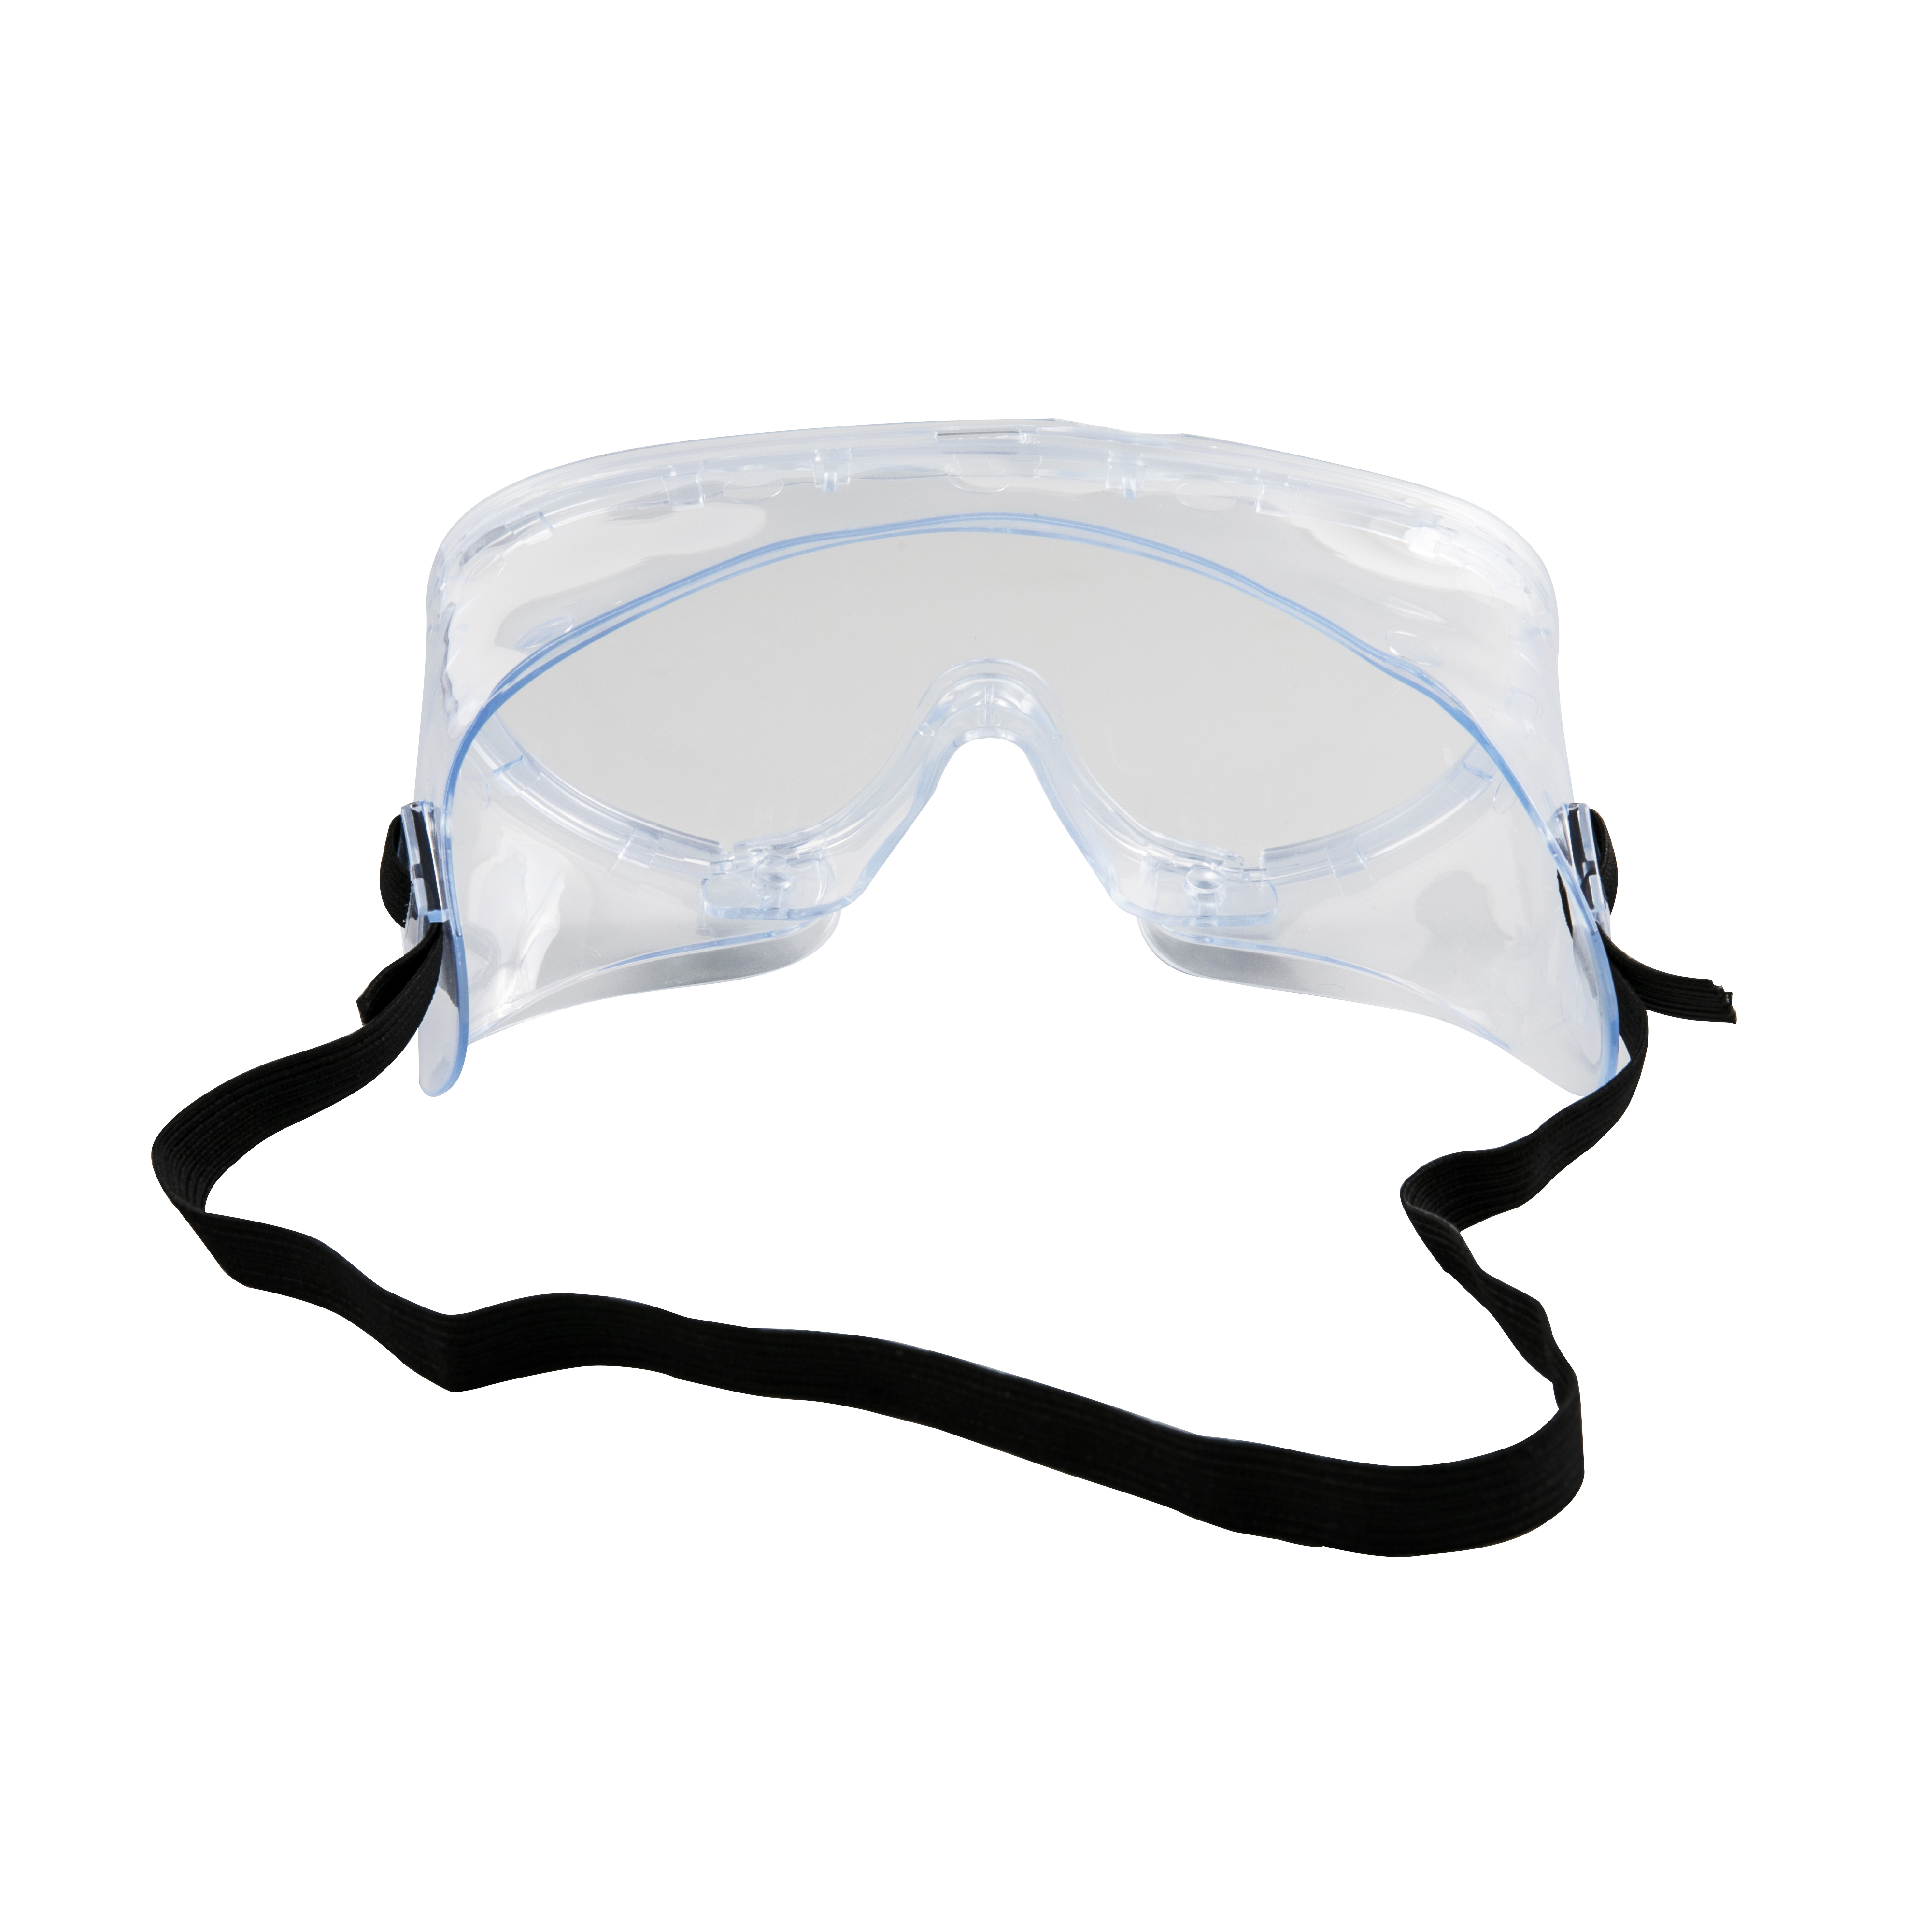 Medical Protective Eye Goggles